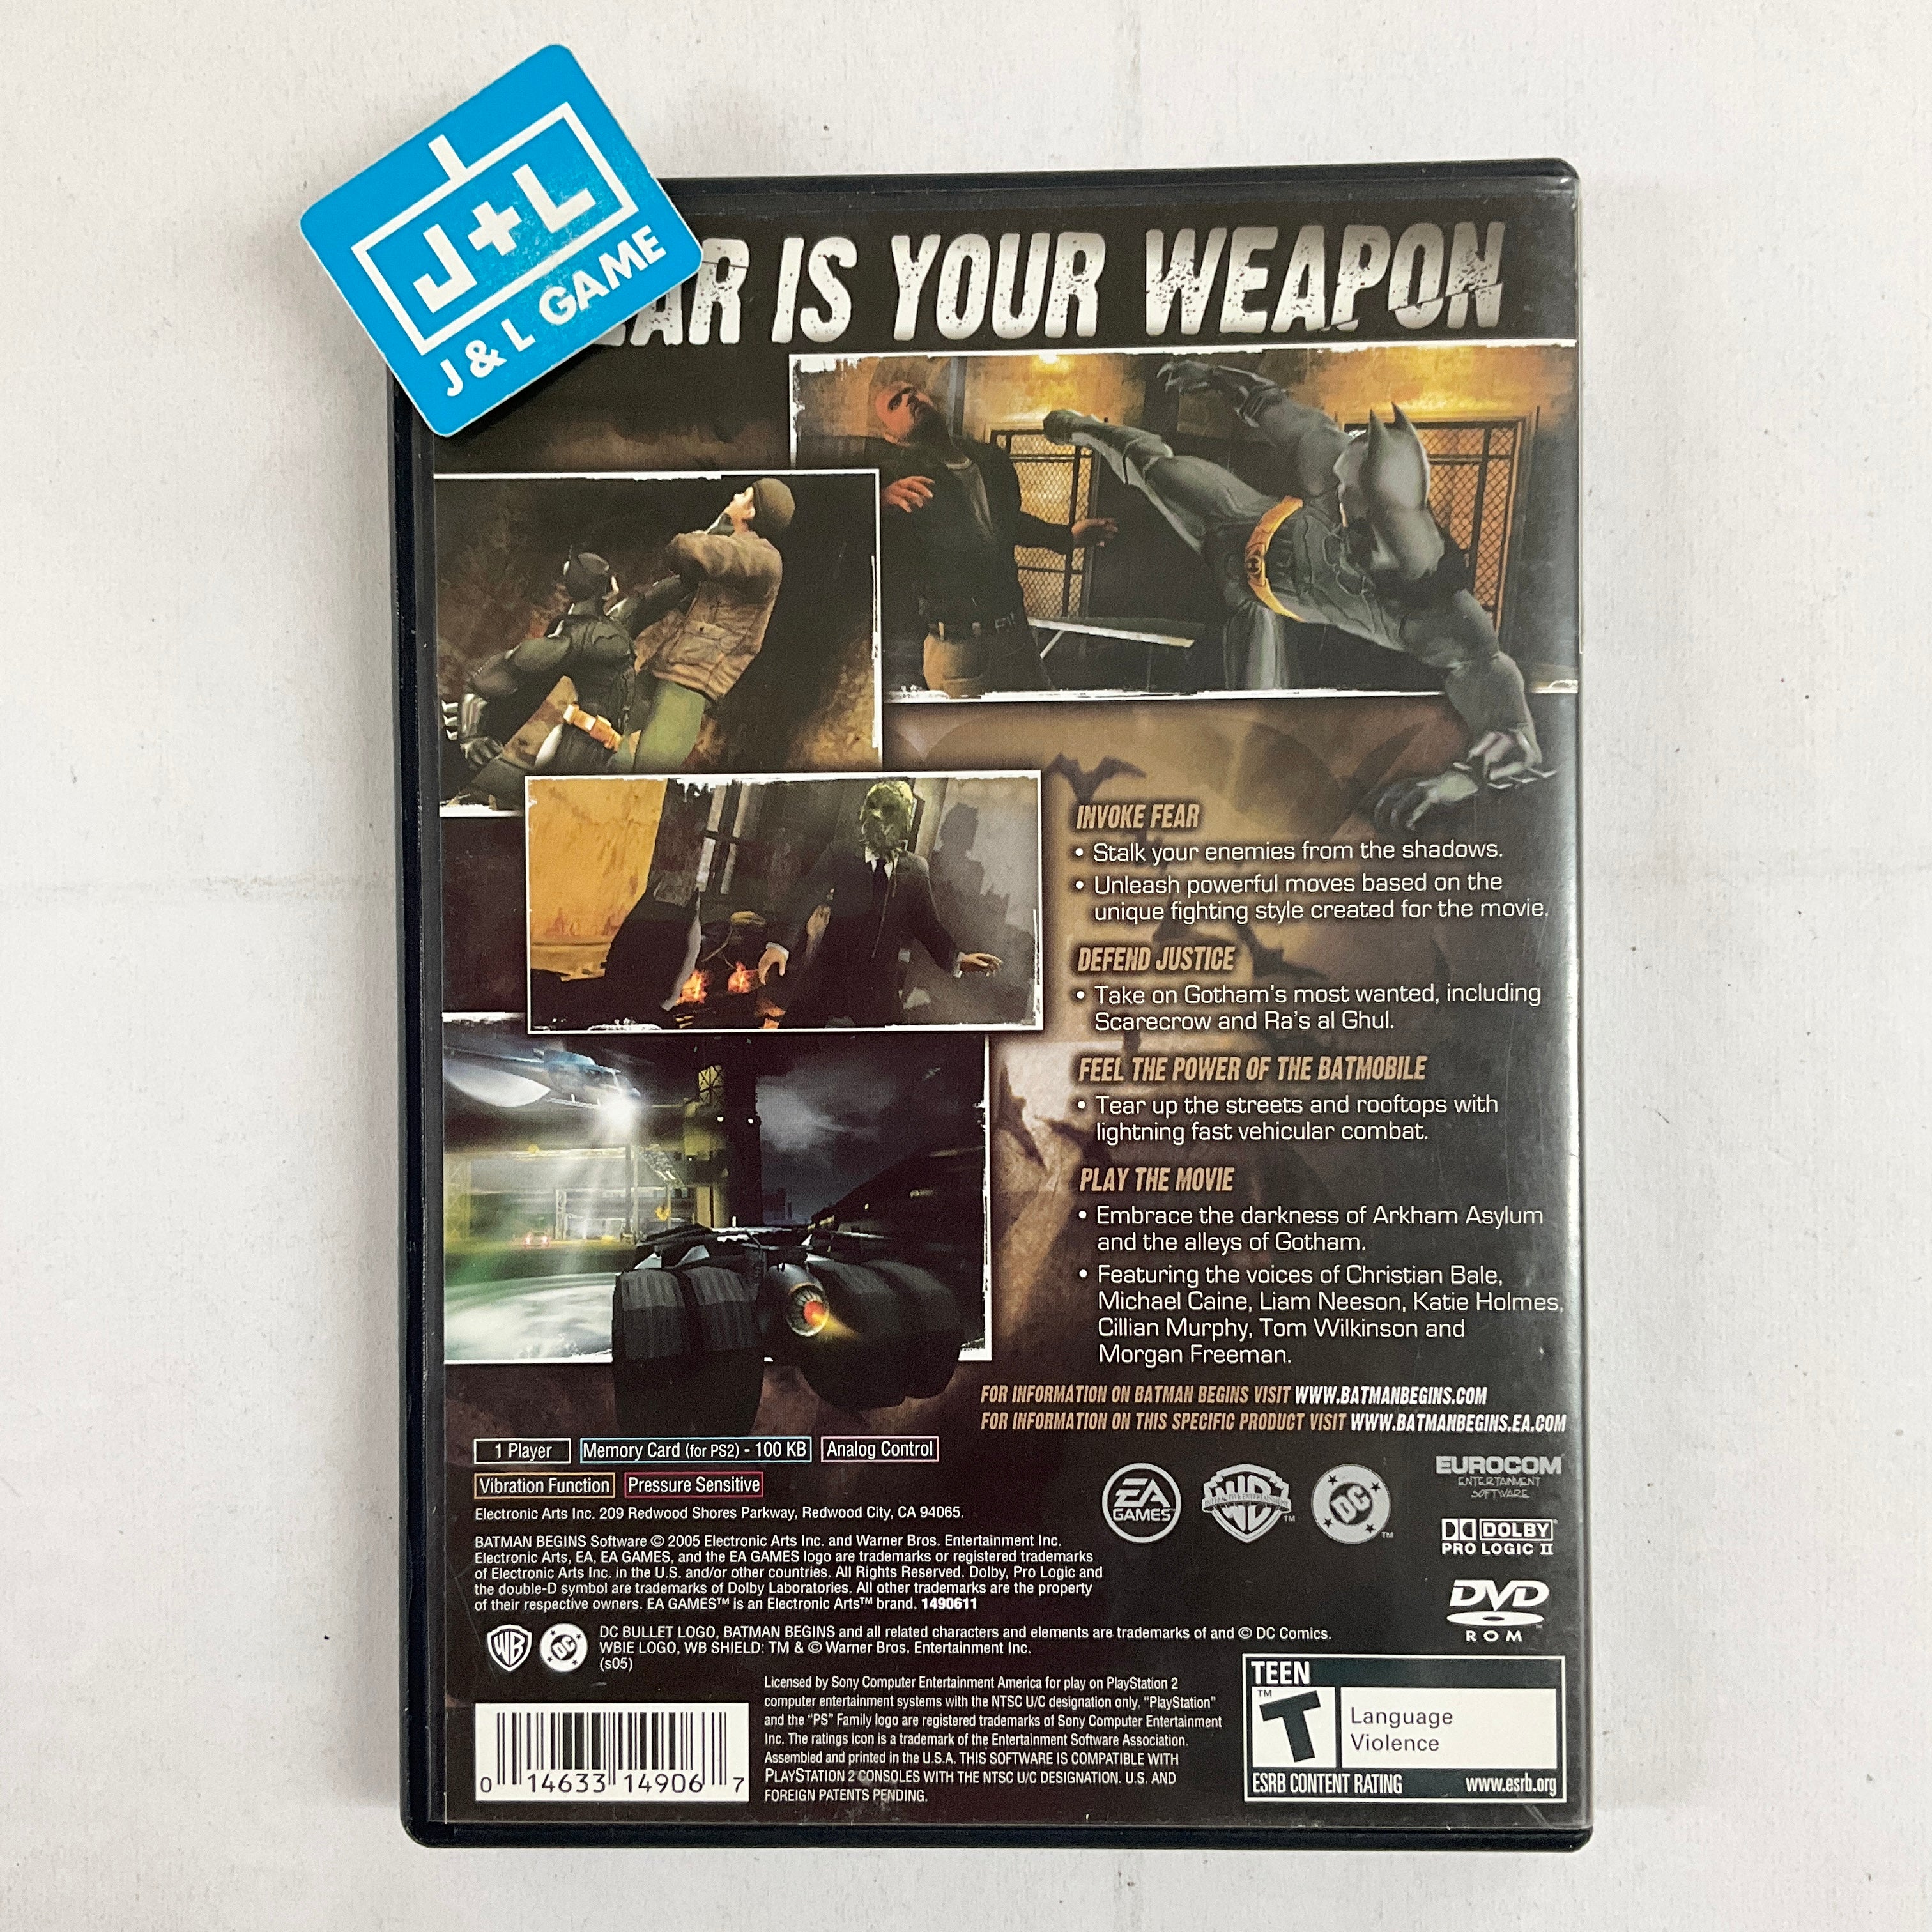 Batman Begins - (PS2) PlayStation 2 [Pre-Owned] Video Games EA Games   